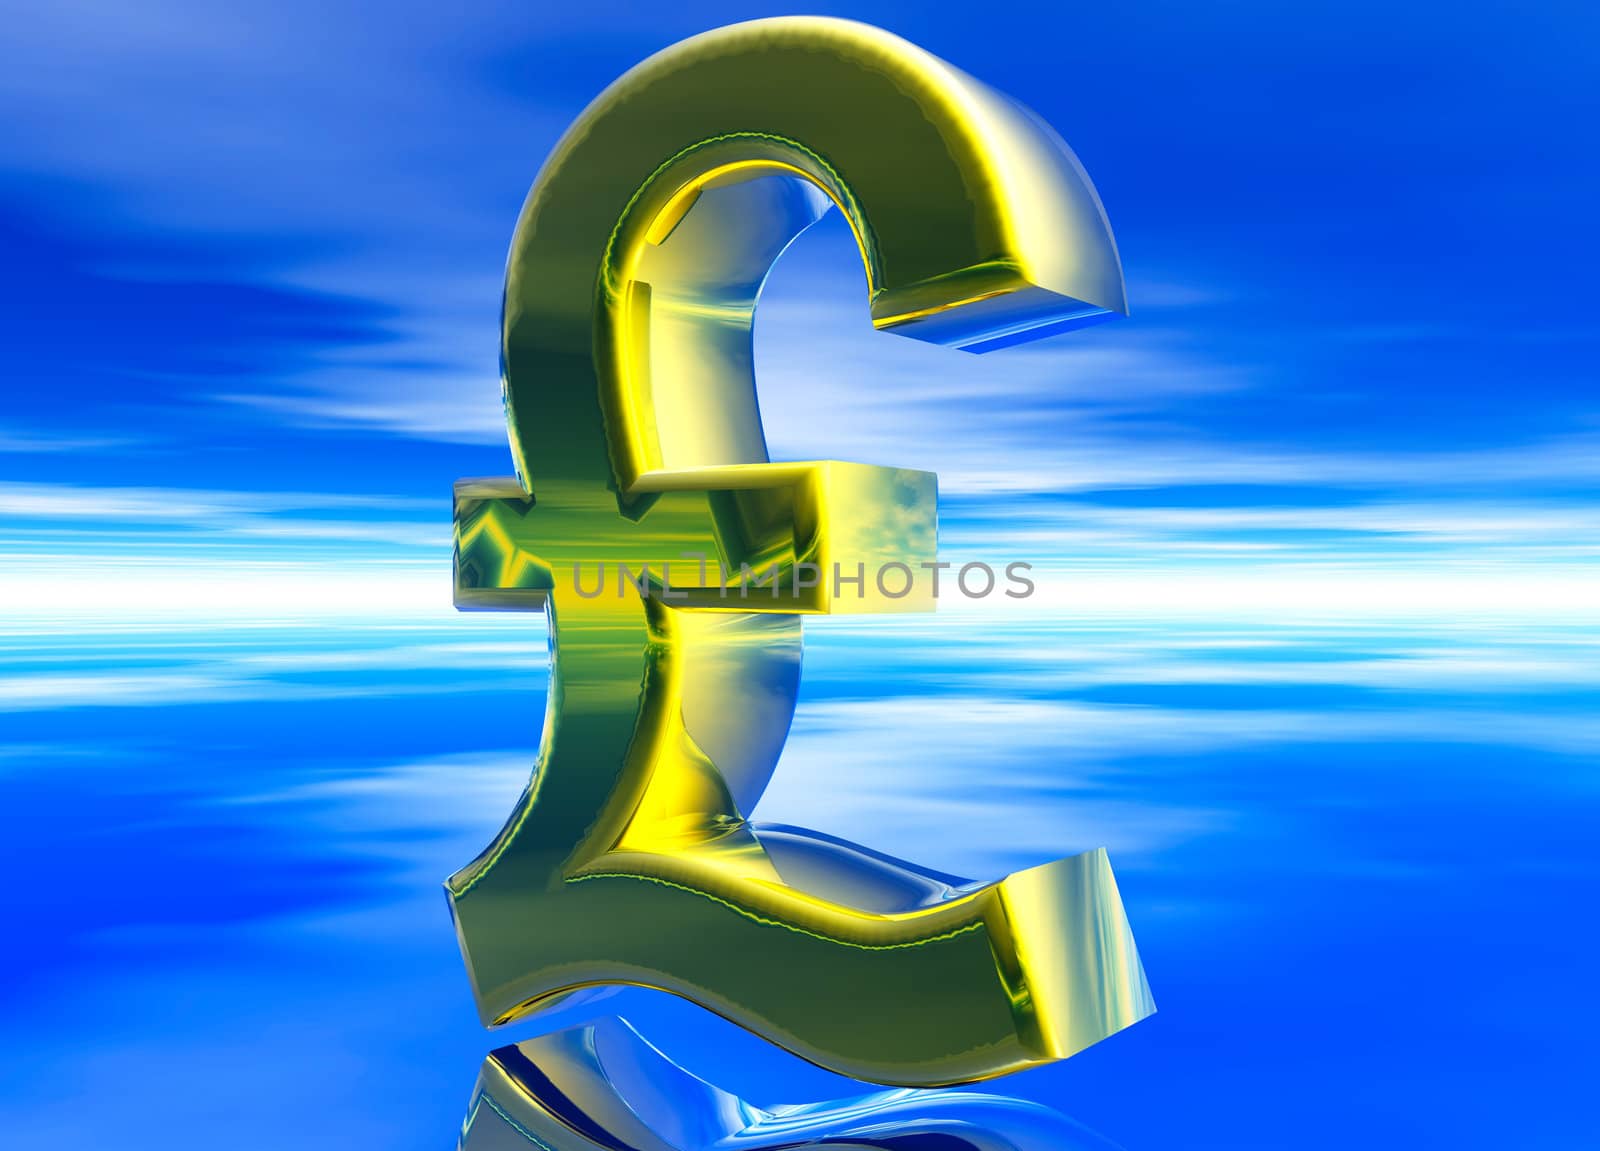 Gold UK GBP Pound Sterling Currency Symbol on Blue Background